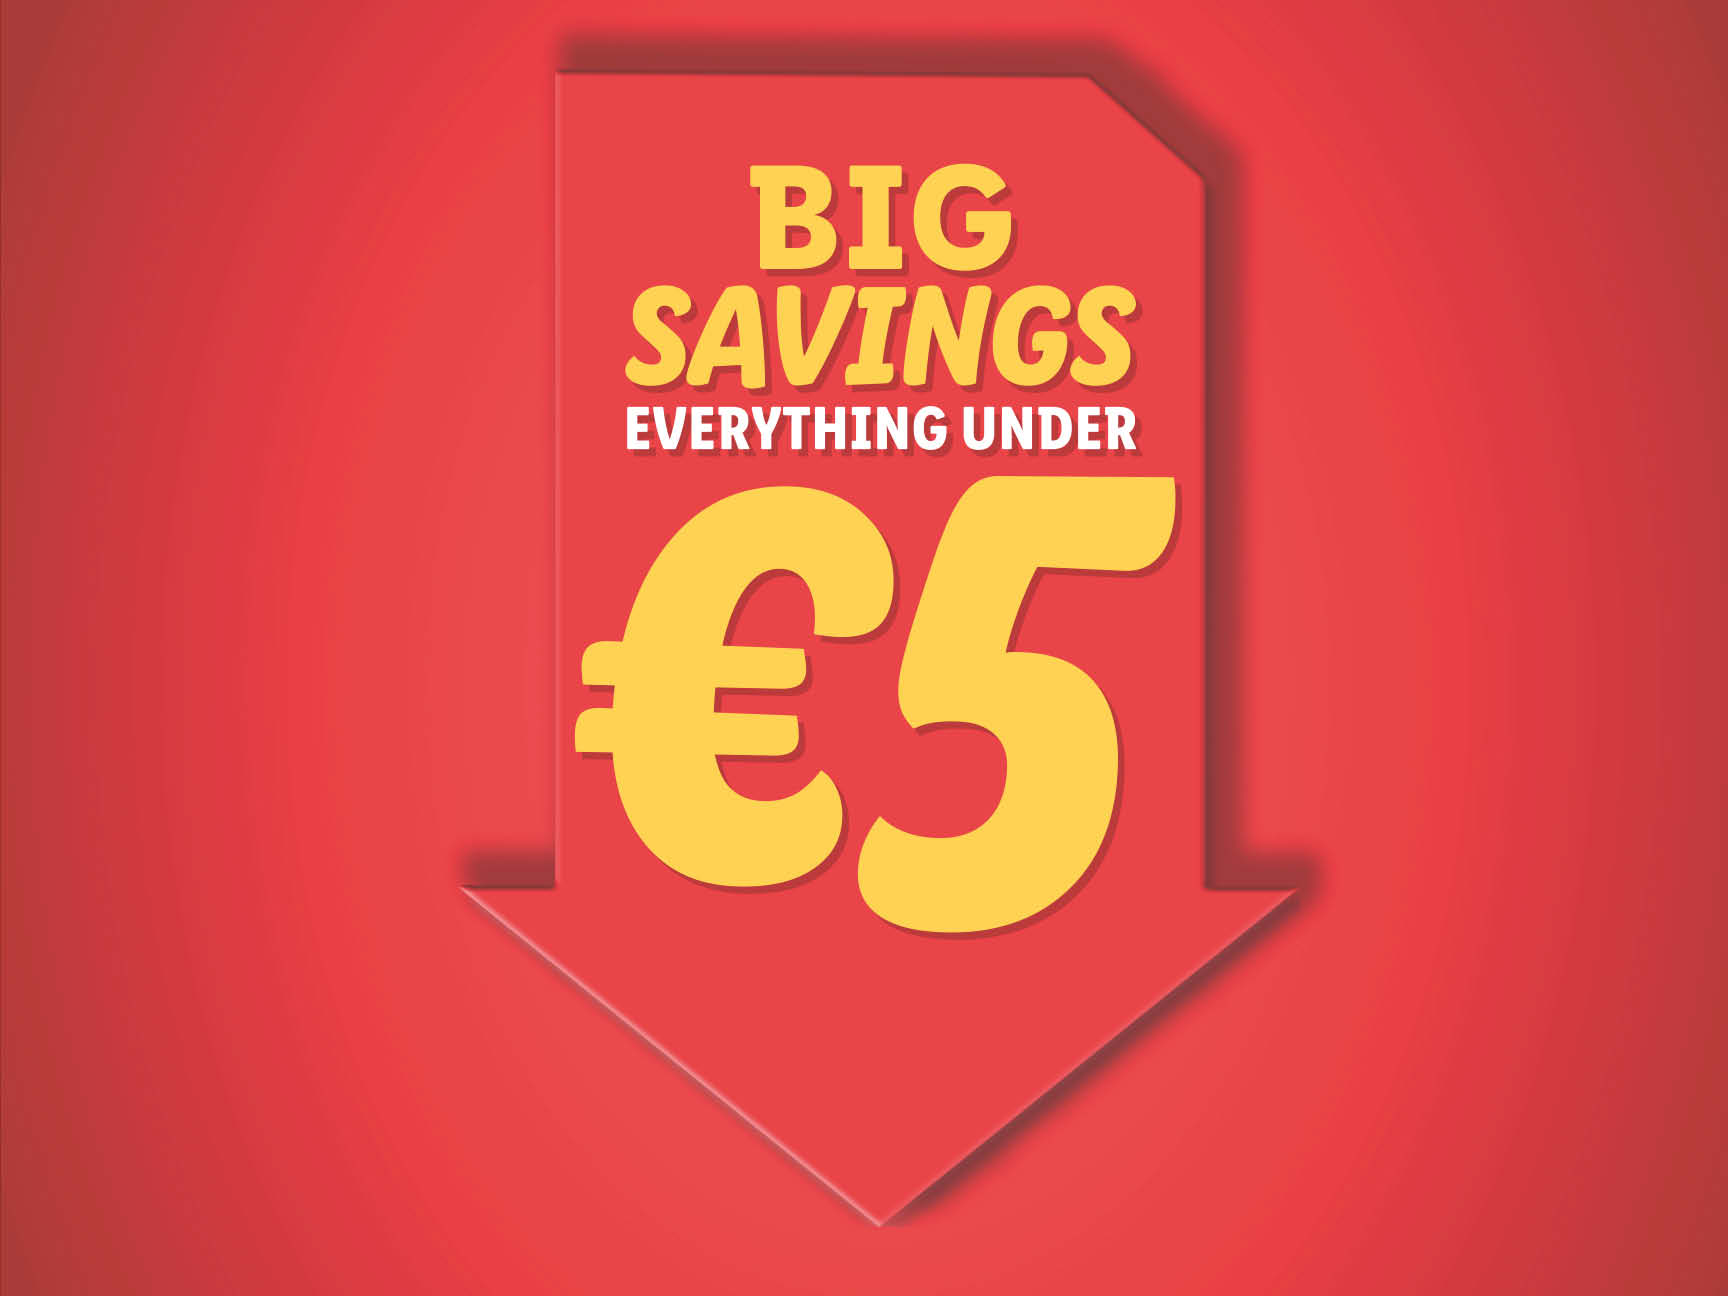 BIG SAVINGS: Everything under €5